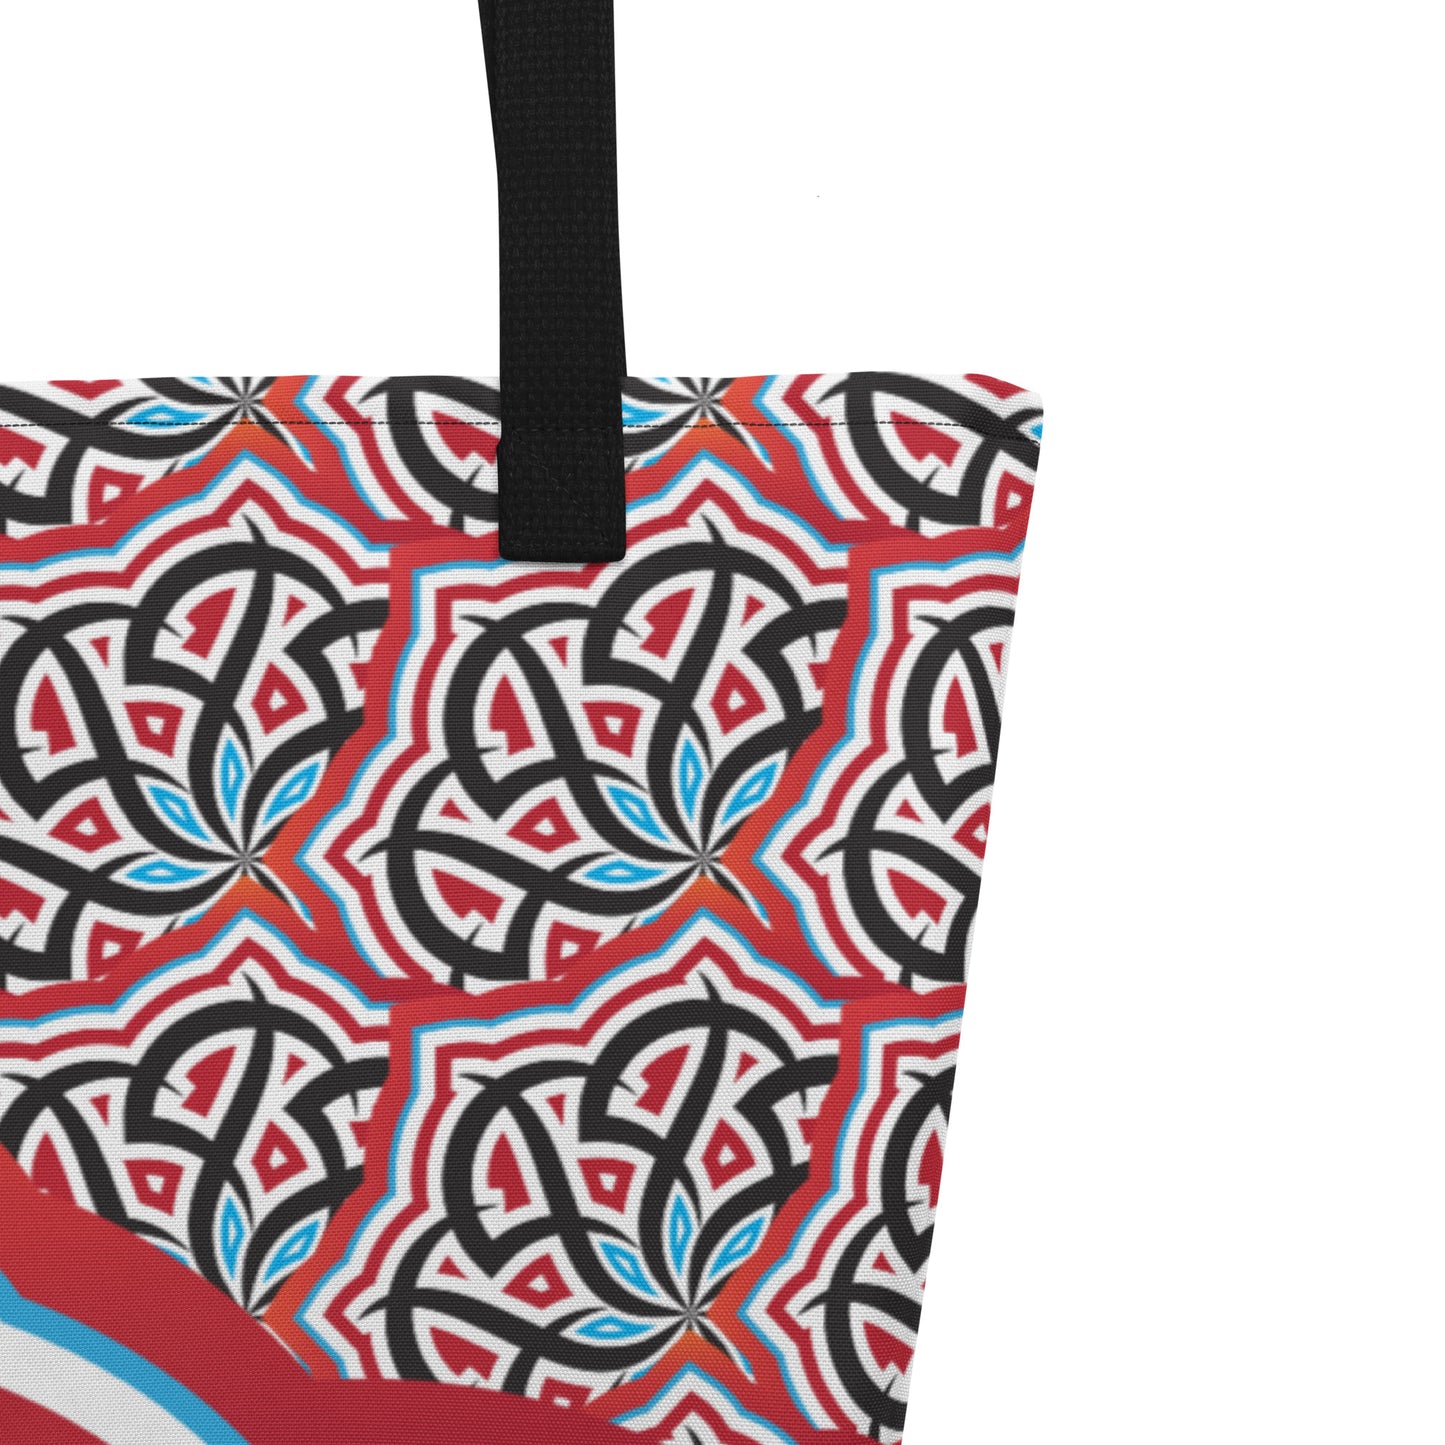 Arabian Summer Dream - All-Over Print Large Tote Bag by Craitza©